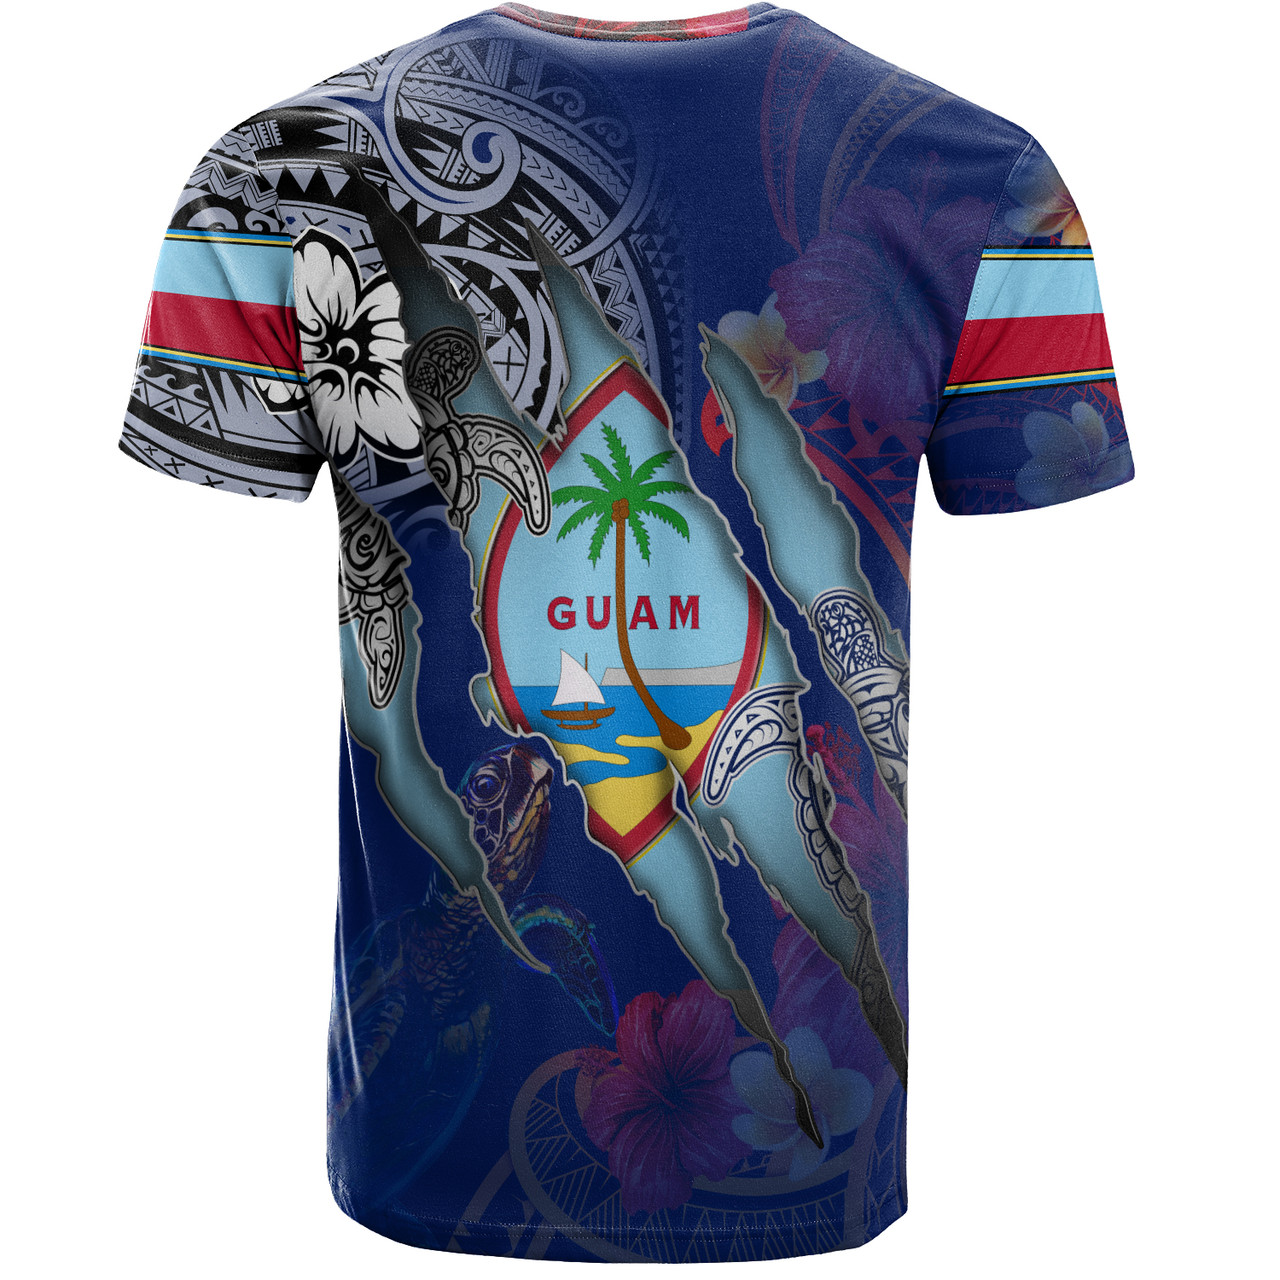 Guam T-Shirt Custom Chamorro Blood Inside Me Polynesian Sleeve Tattoo Tropical Blue